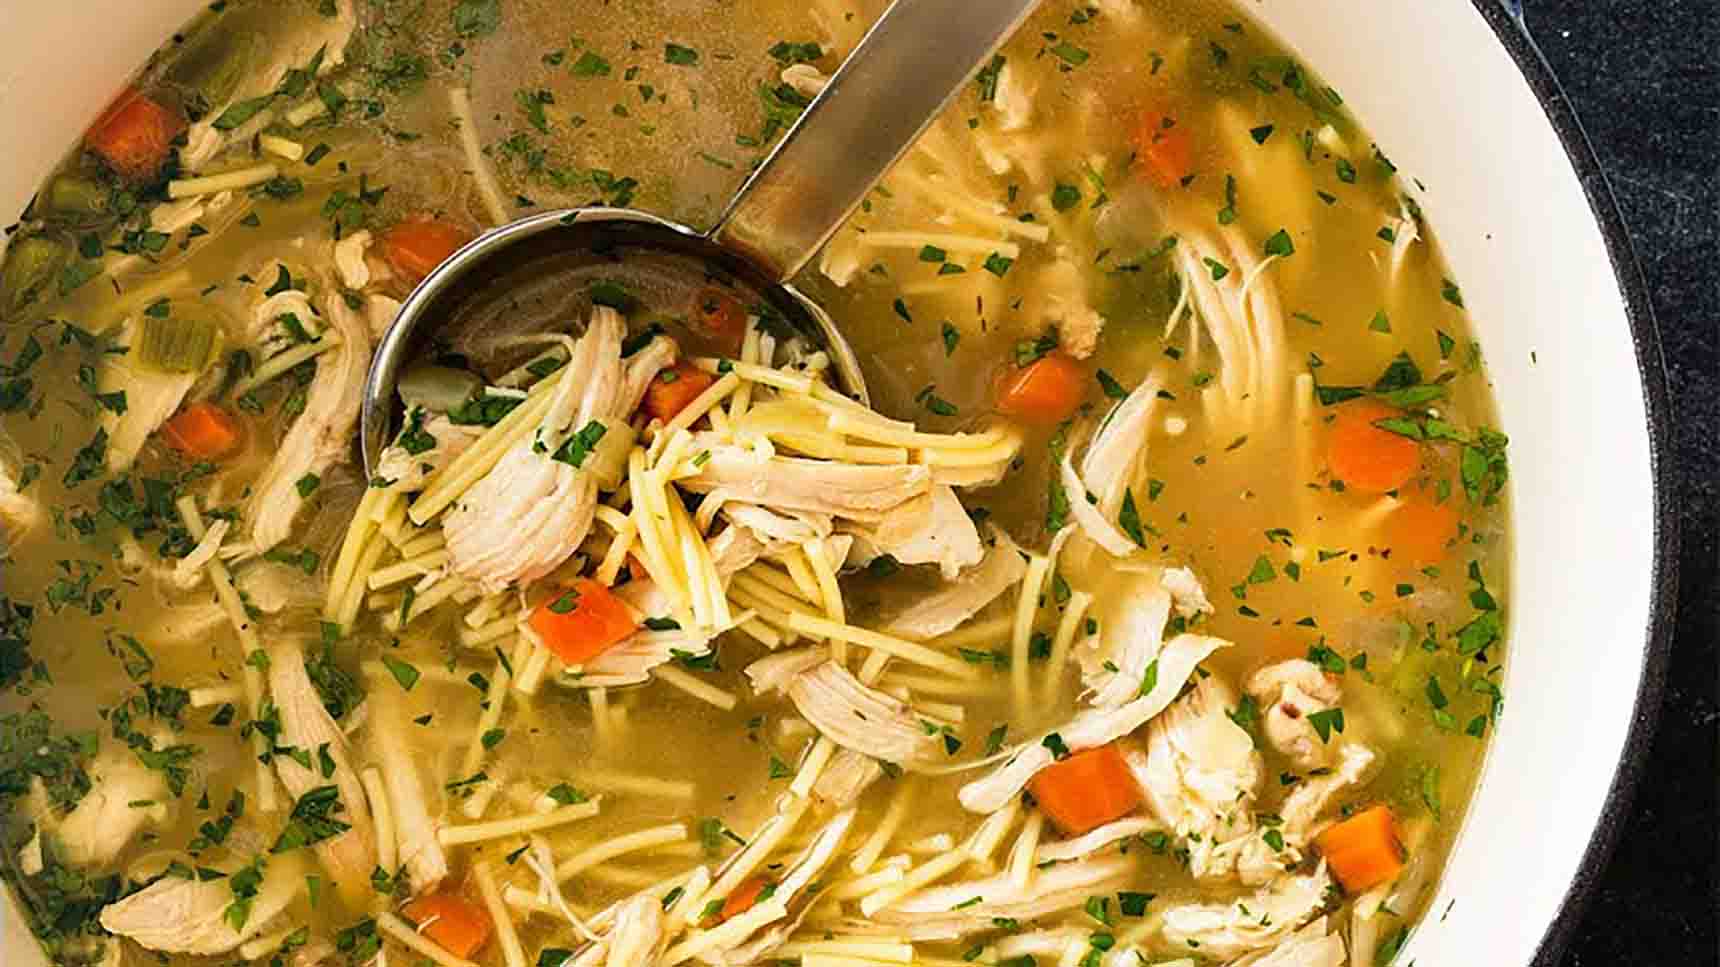 https://diyjoy.com/wp-content/uploads/2022/10/old-fashioned-chicken-noodle-soup-recipe.jpg